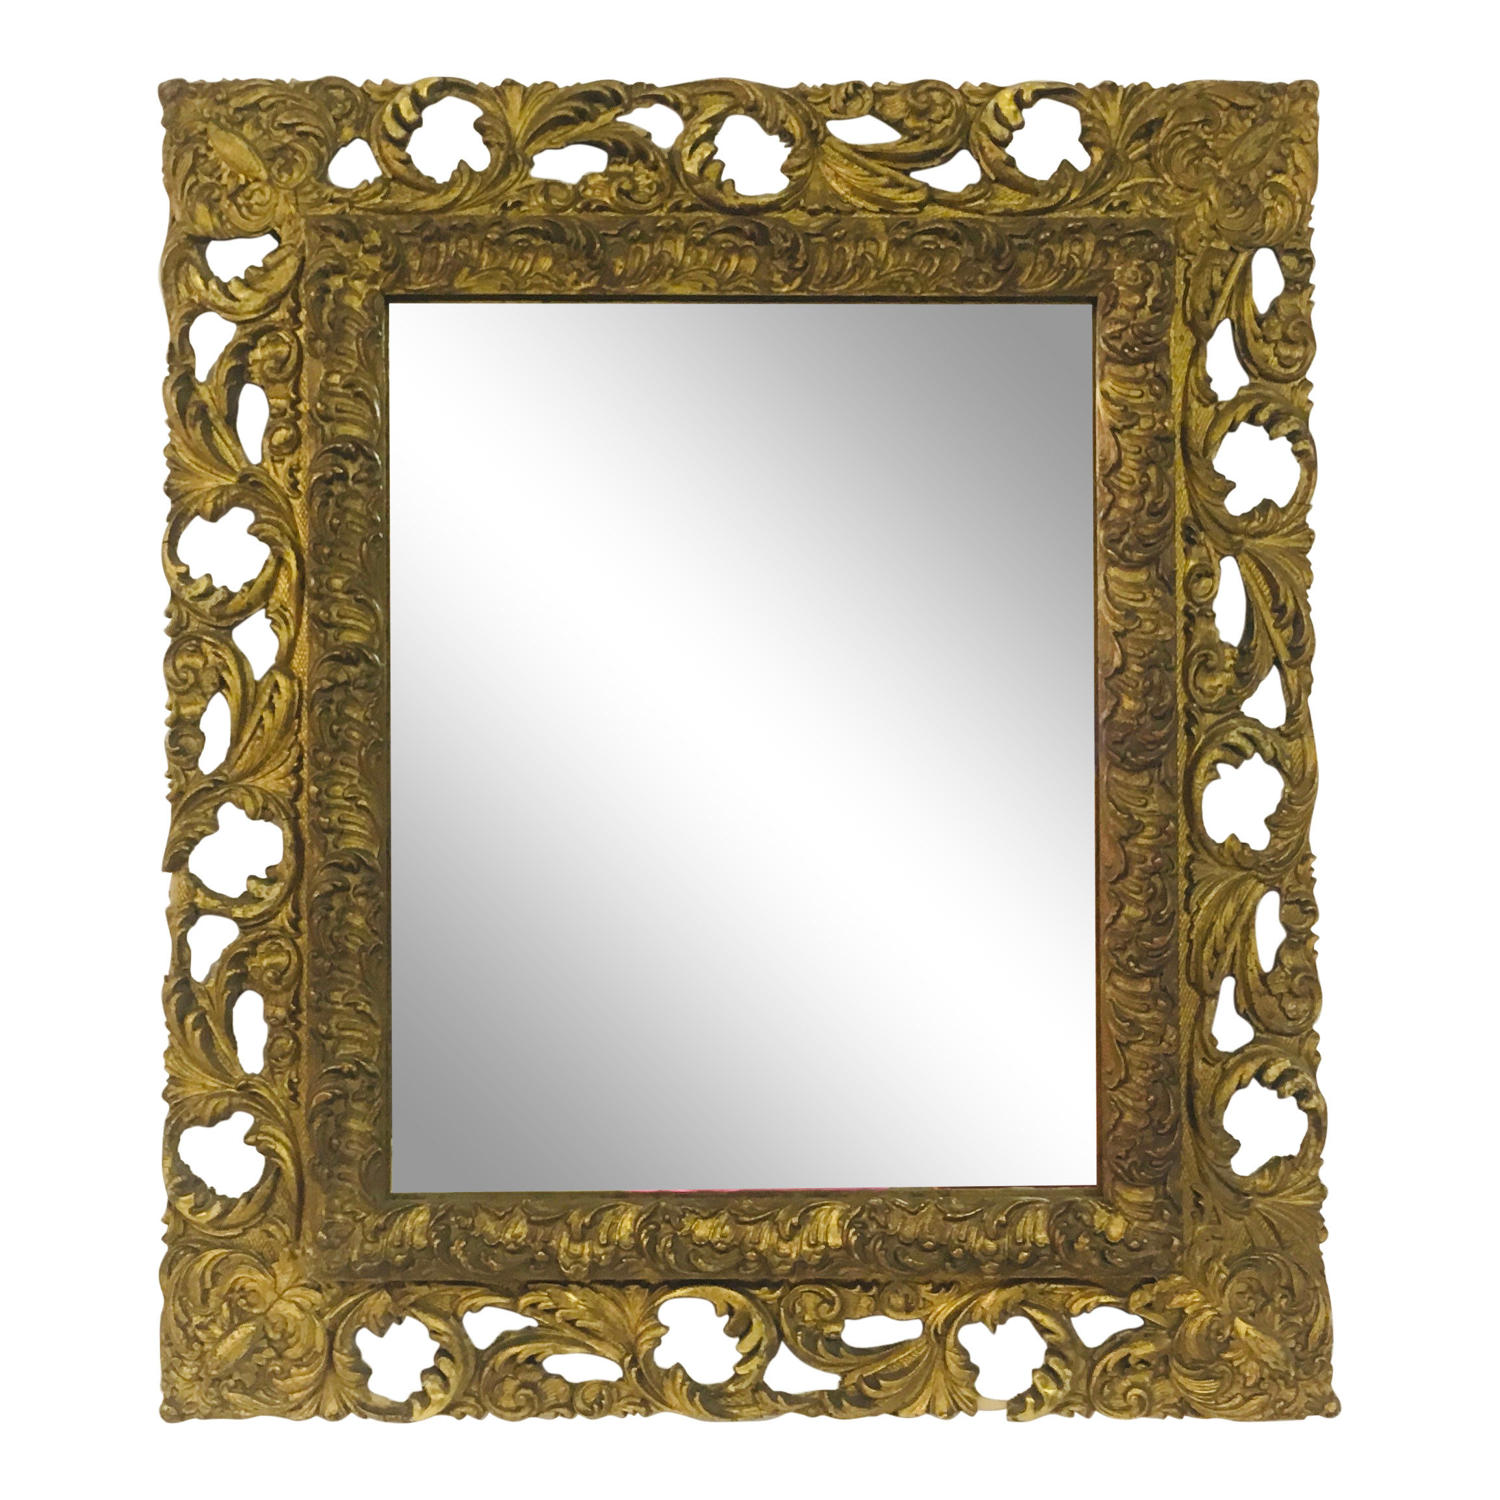 Antique Florentine gilt wood and gesso mirror